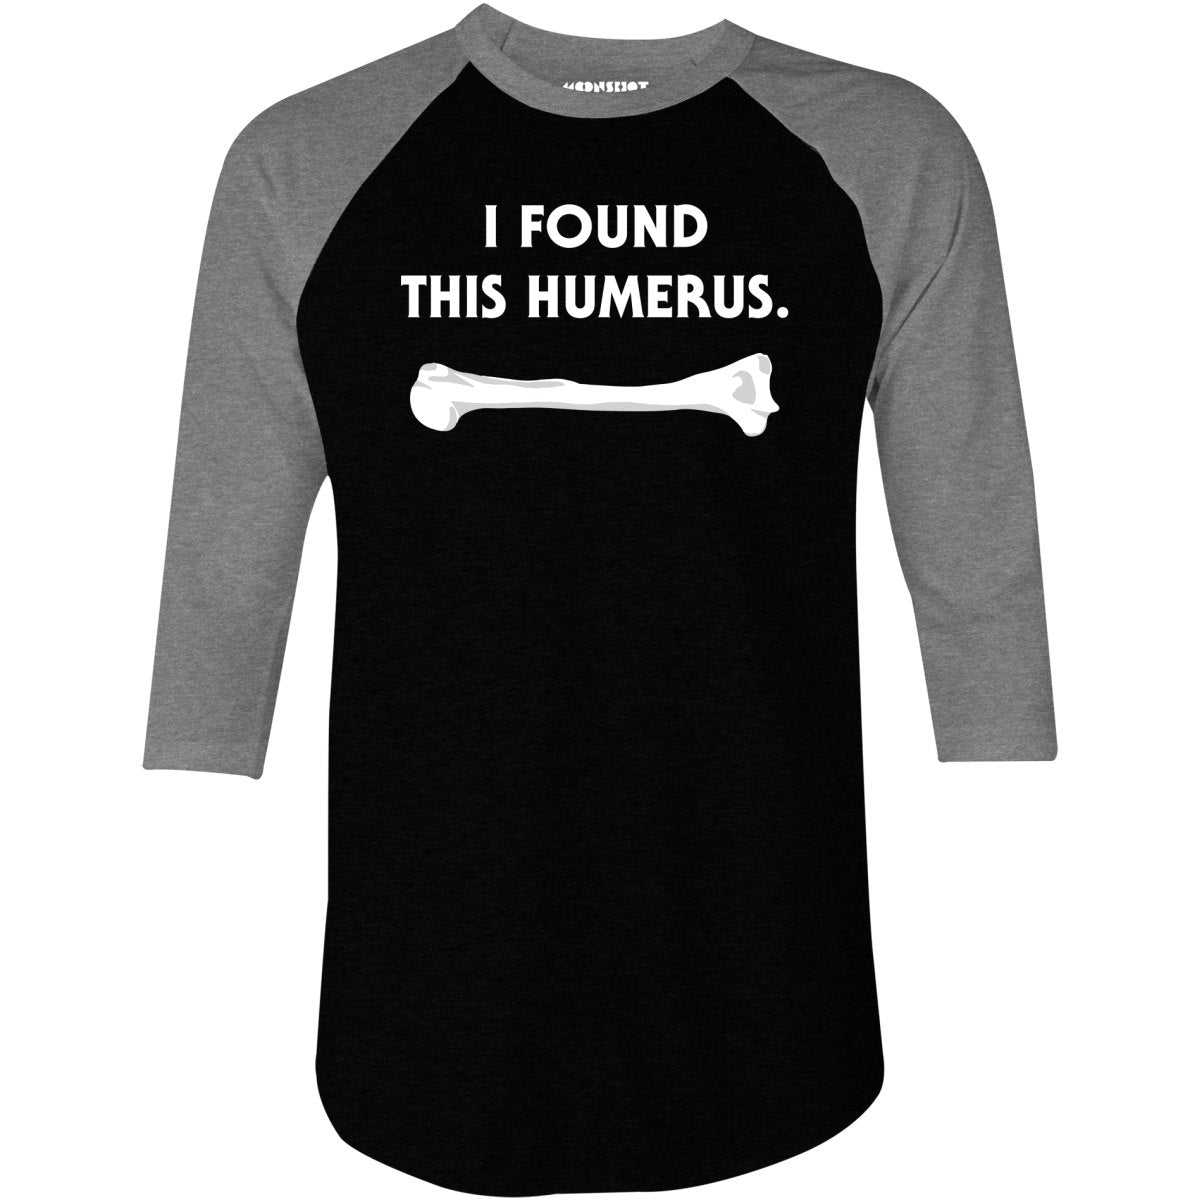 I Found This Humerus - 3/4 Sleeve Raglan T-Shirt